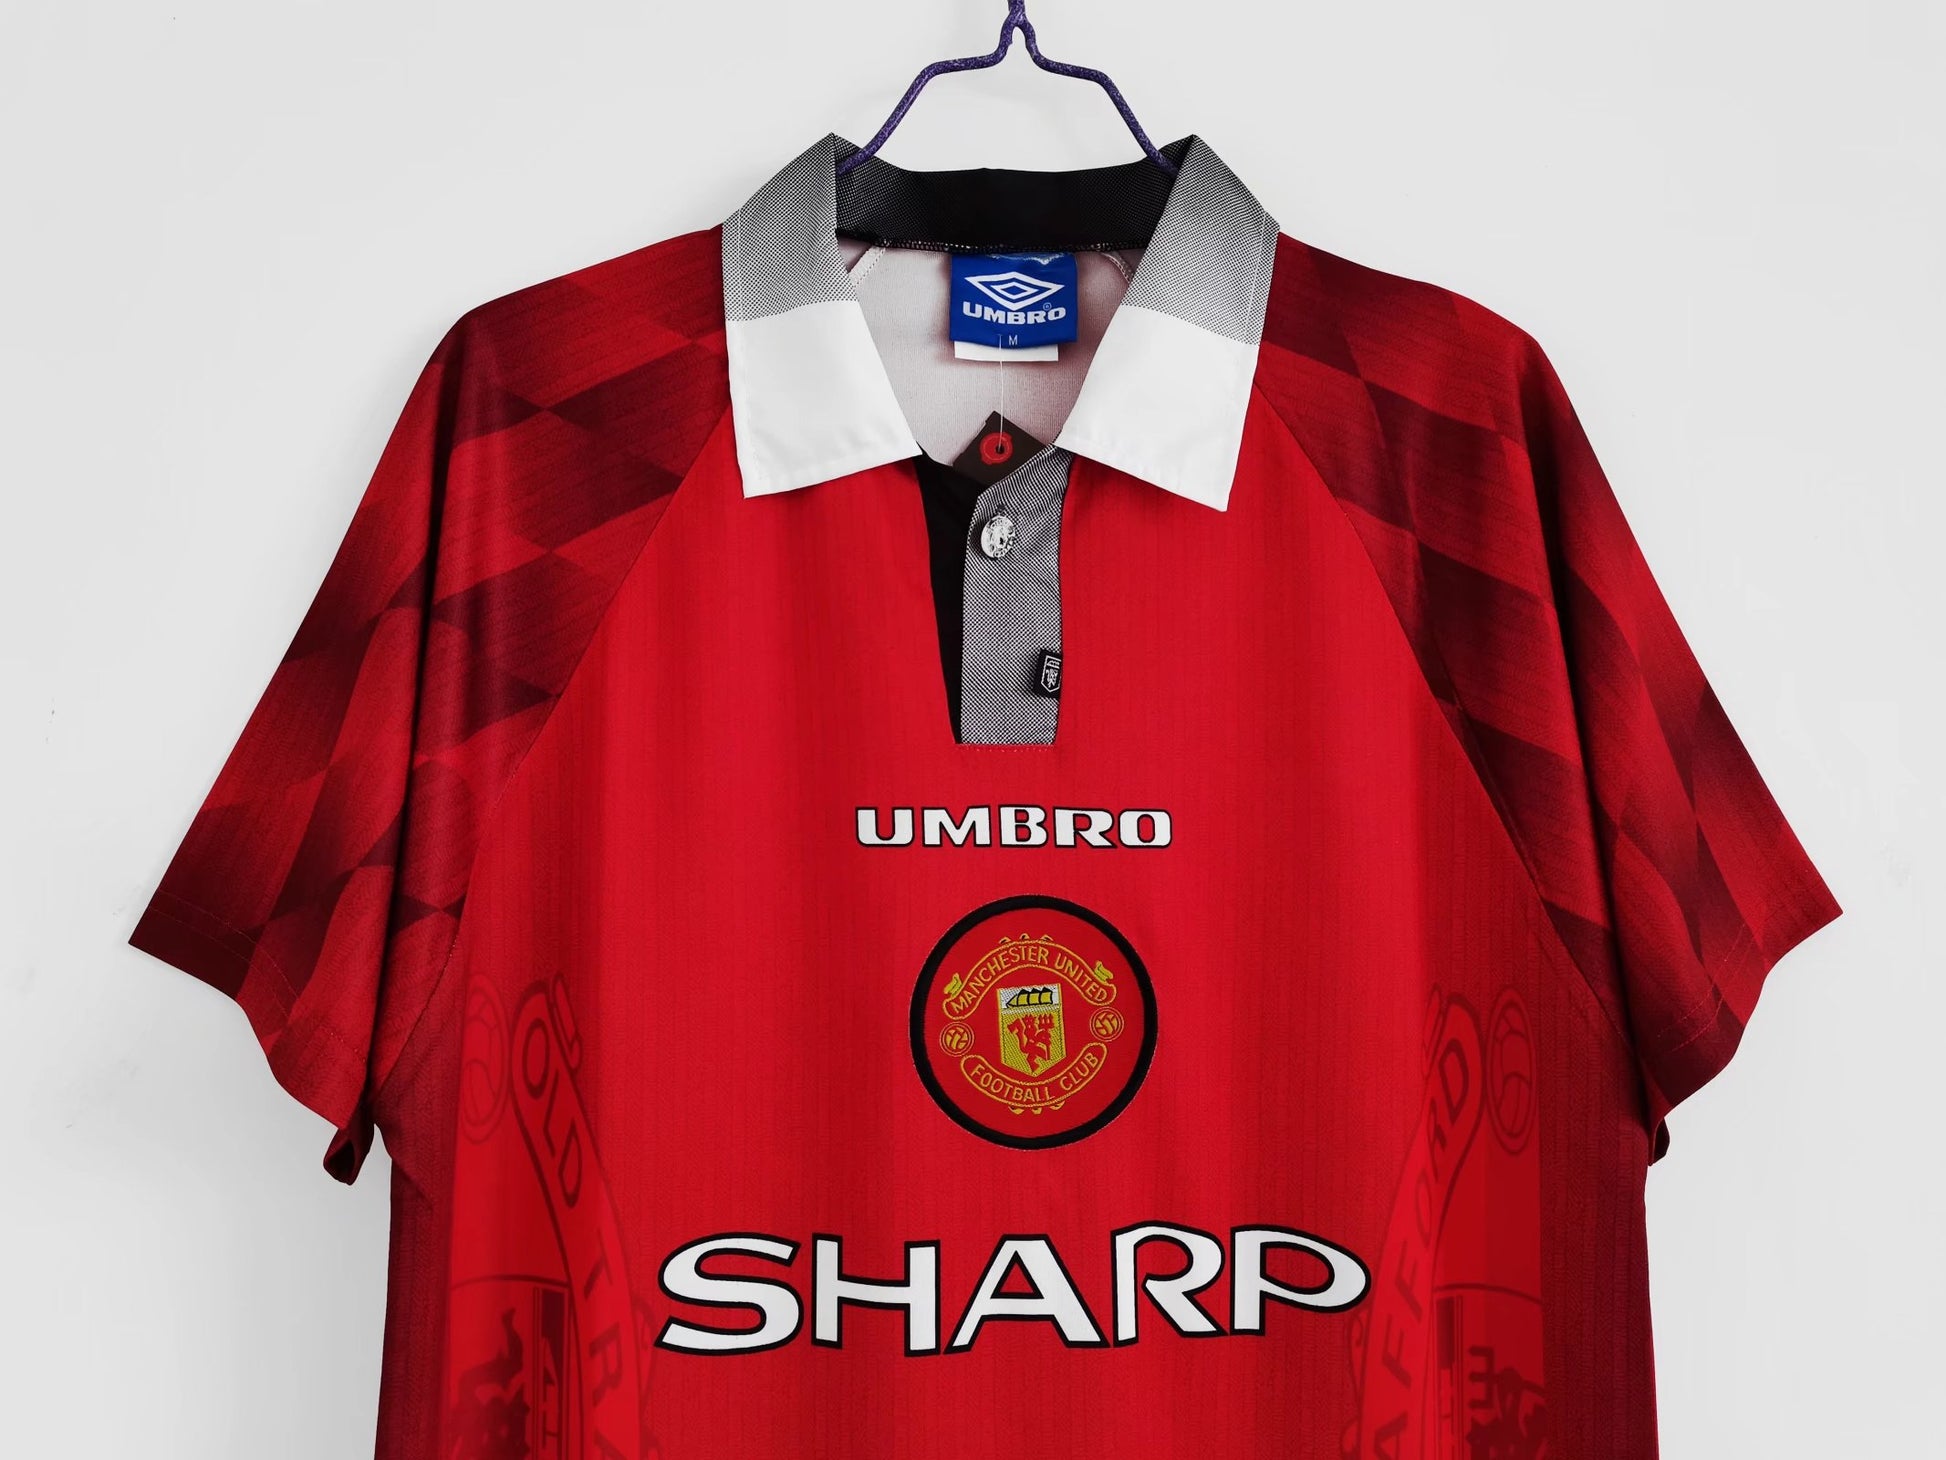 1996/97 Manchester United Treble Home Retro Kit